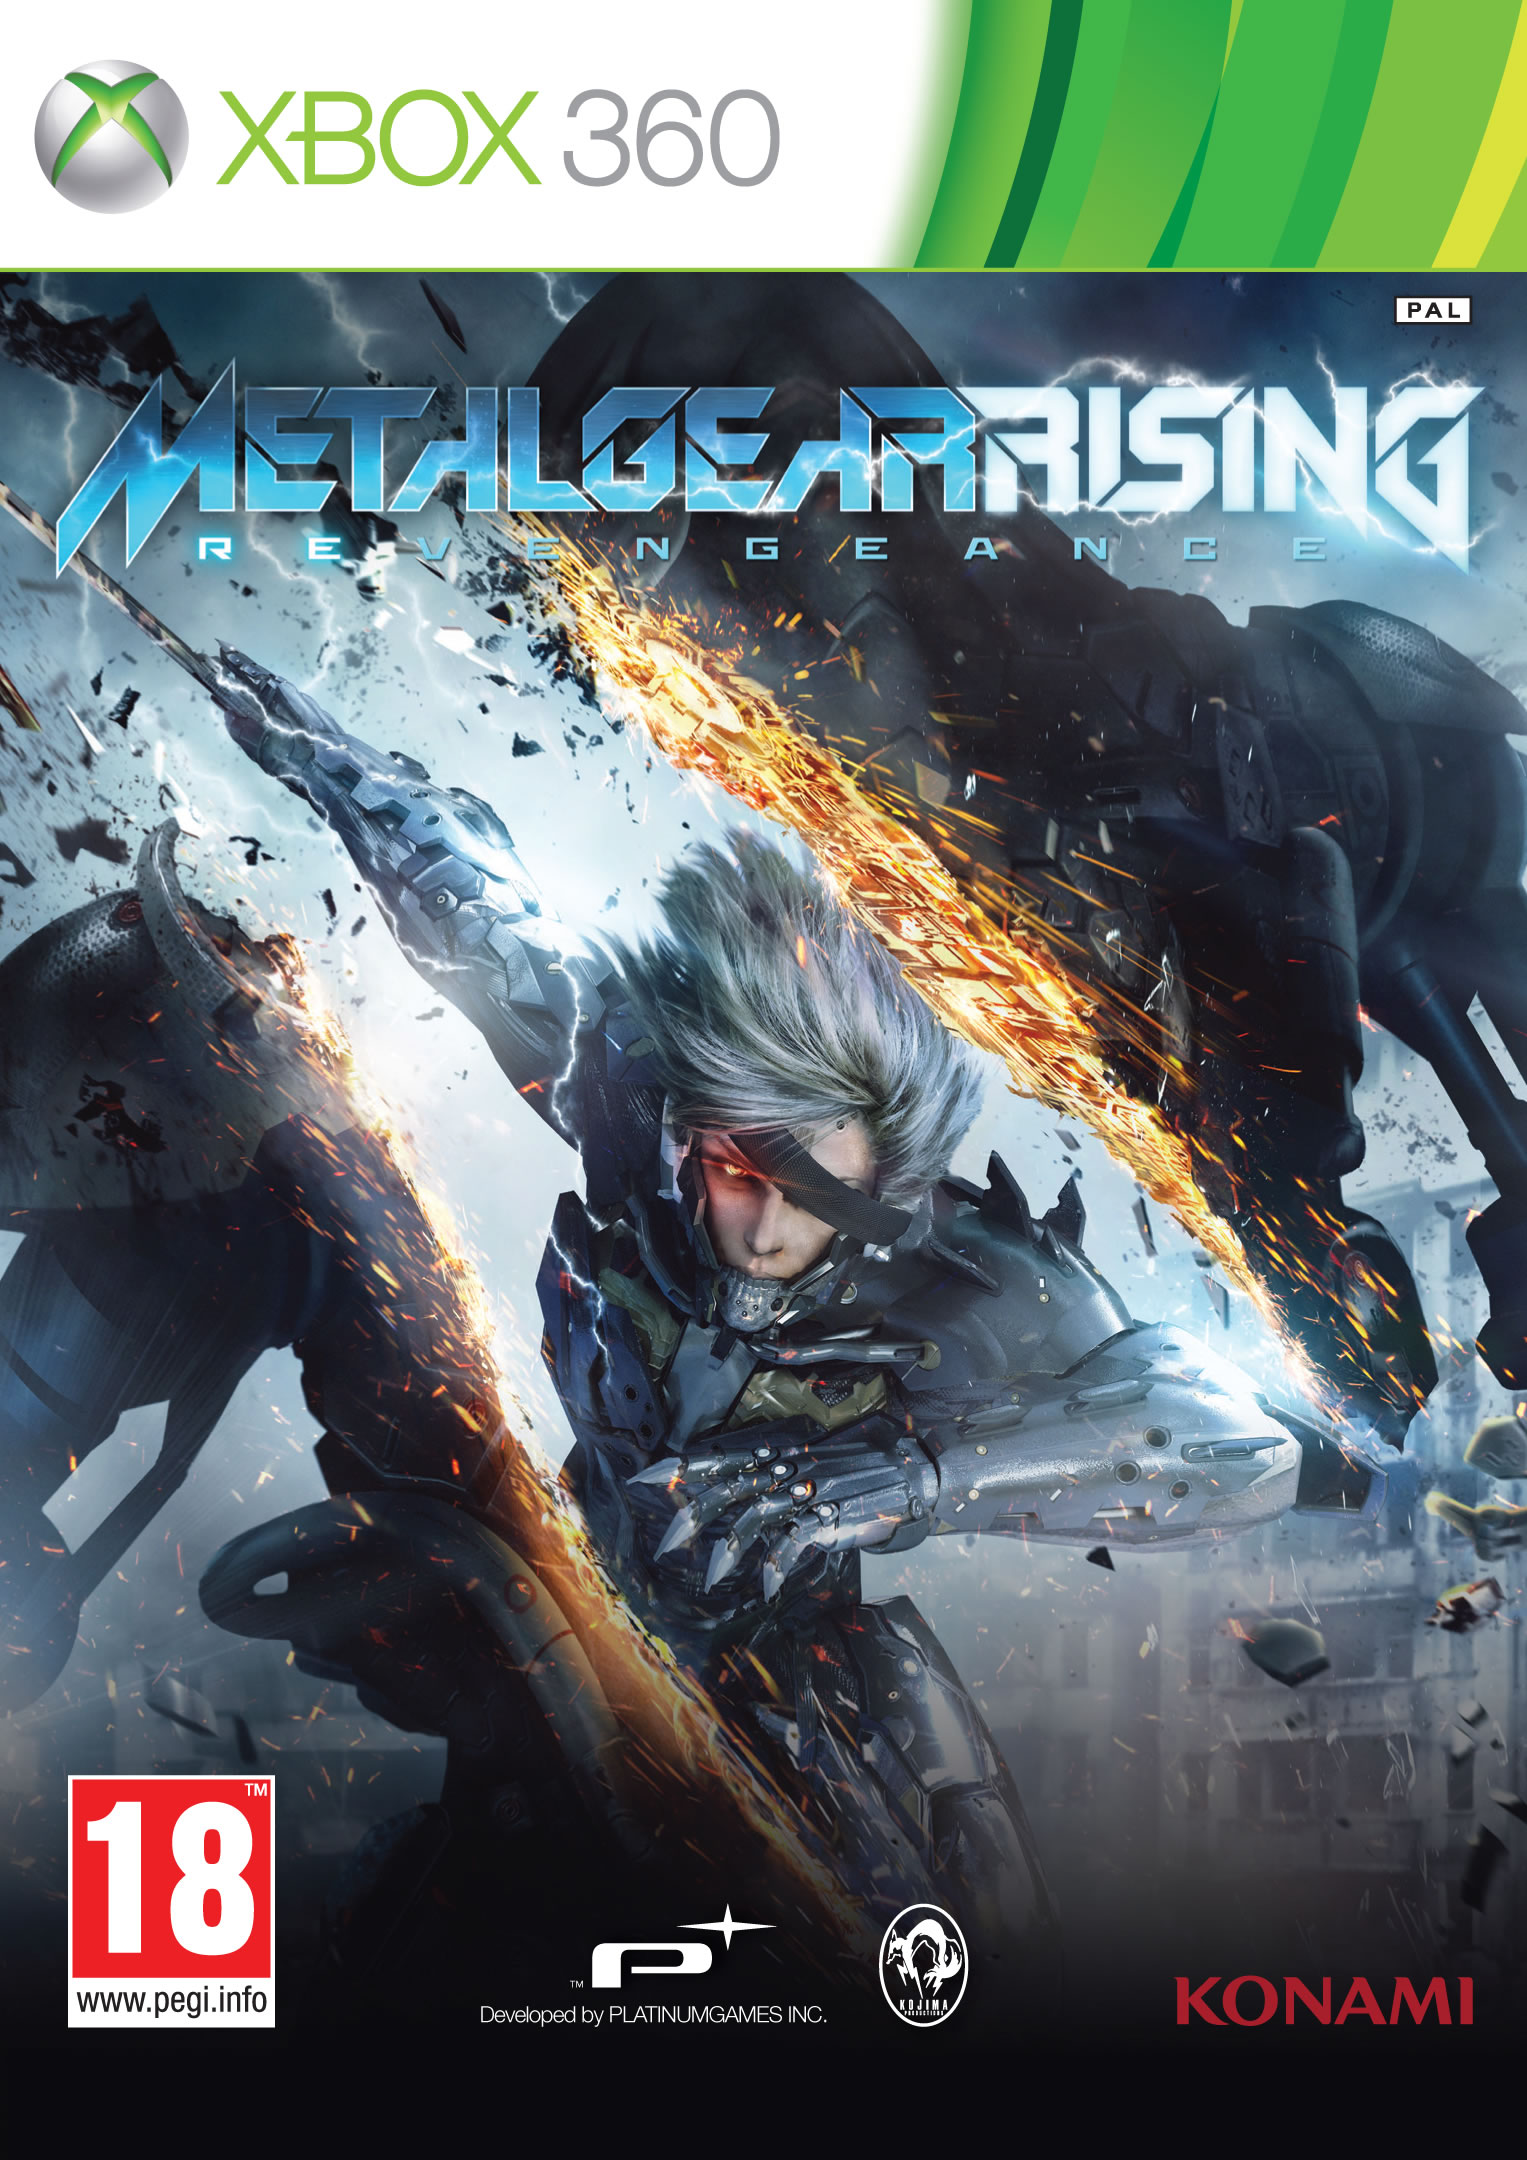 La jaquette europenne de Metal Gear Rising Revengeance -  Xbox 360